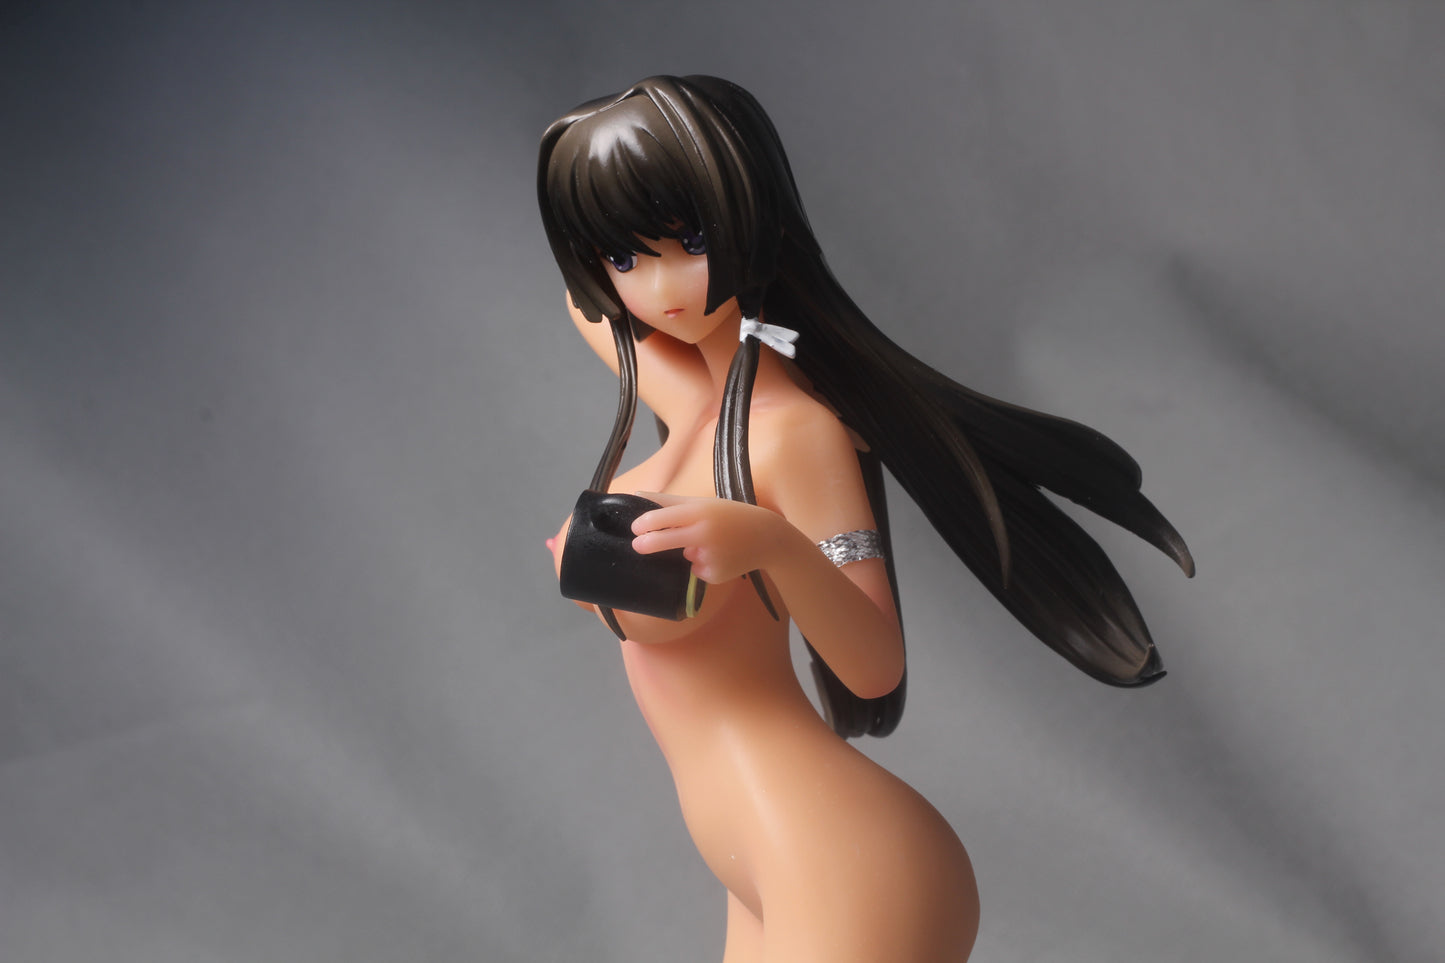 Muv-Luv Alternative Total Ecli Yui Takamura 1/6 naked anime figure sexy